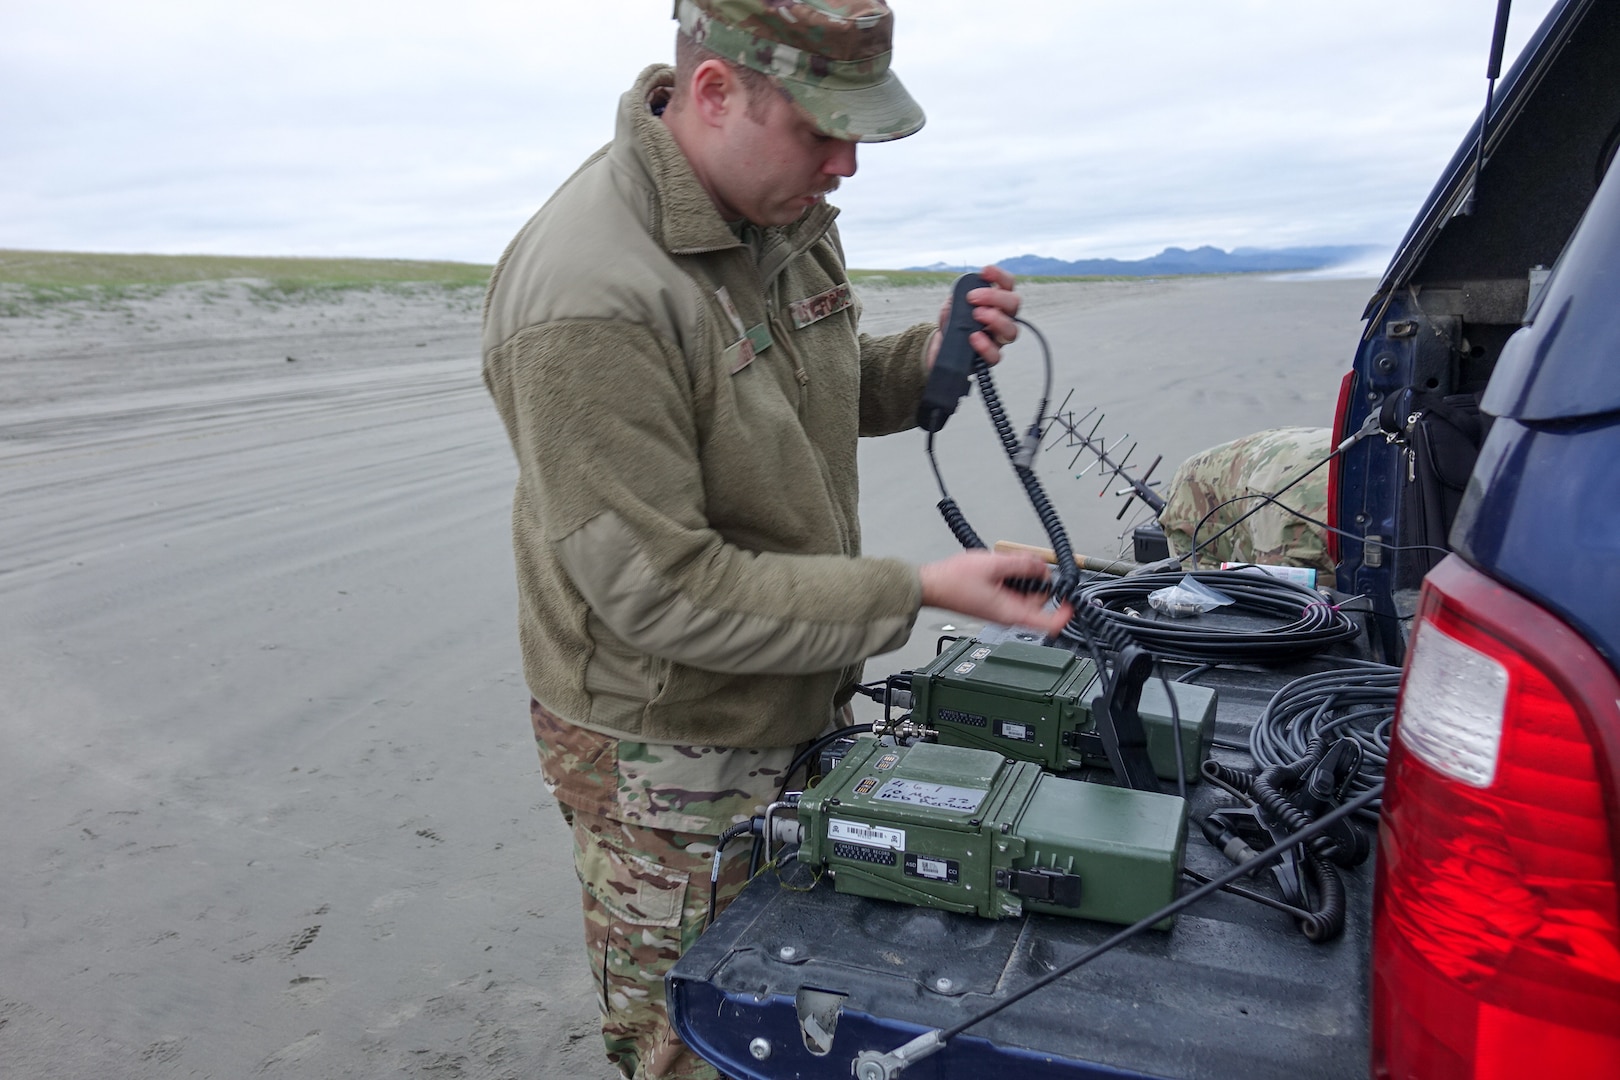 Setting up communication equipment on an Oregon beach